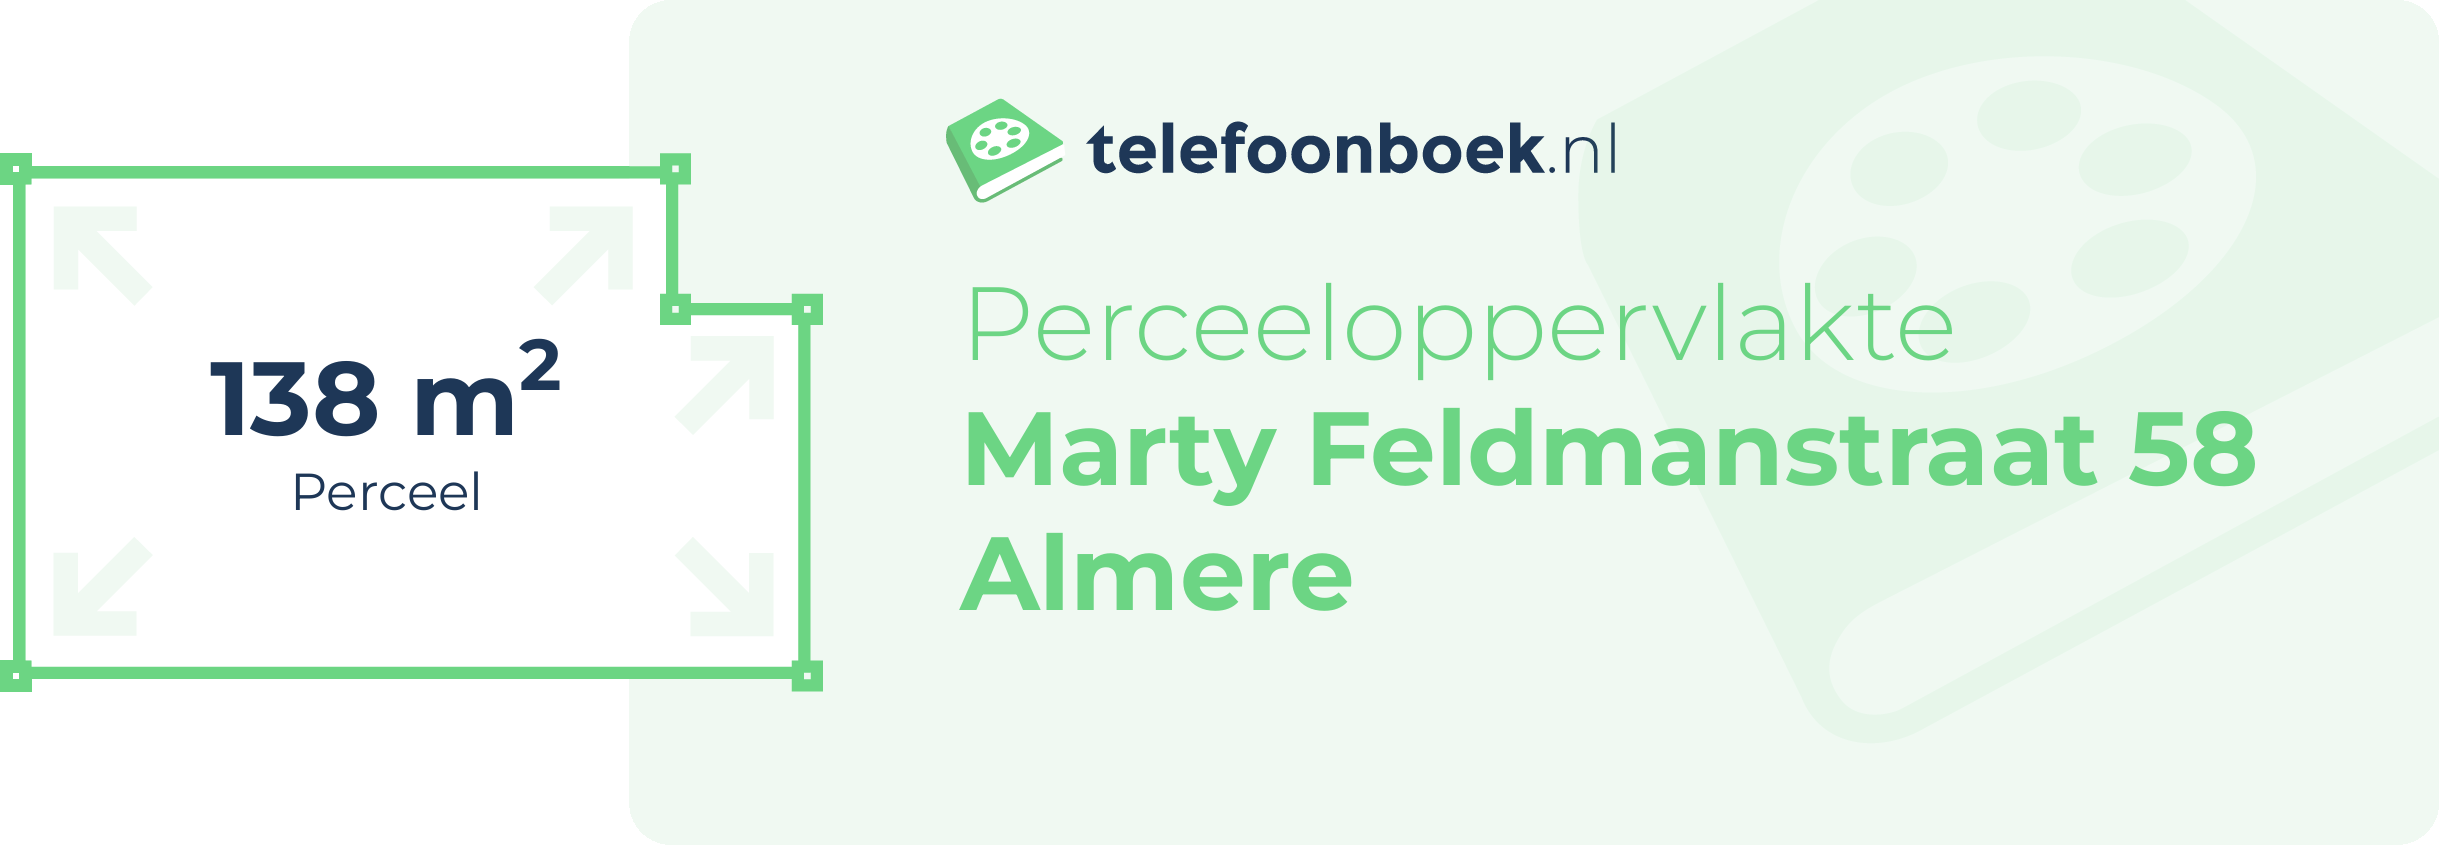 Perceeloppervlakte Marty Feldmanstraat 58 Almere